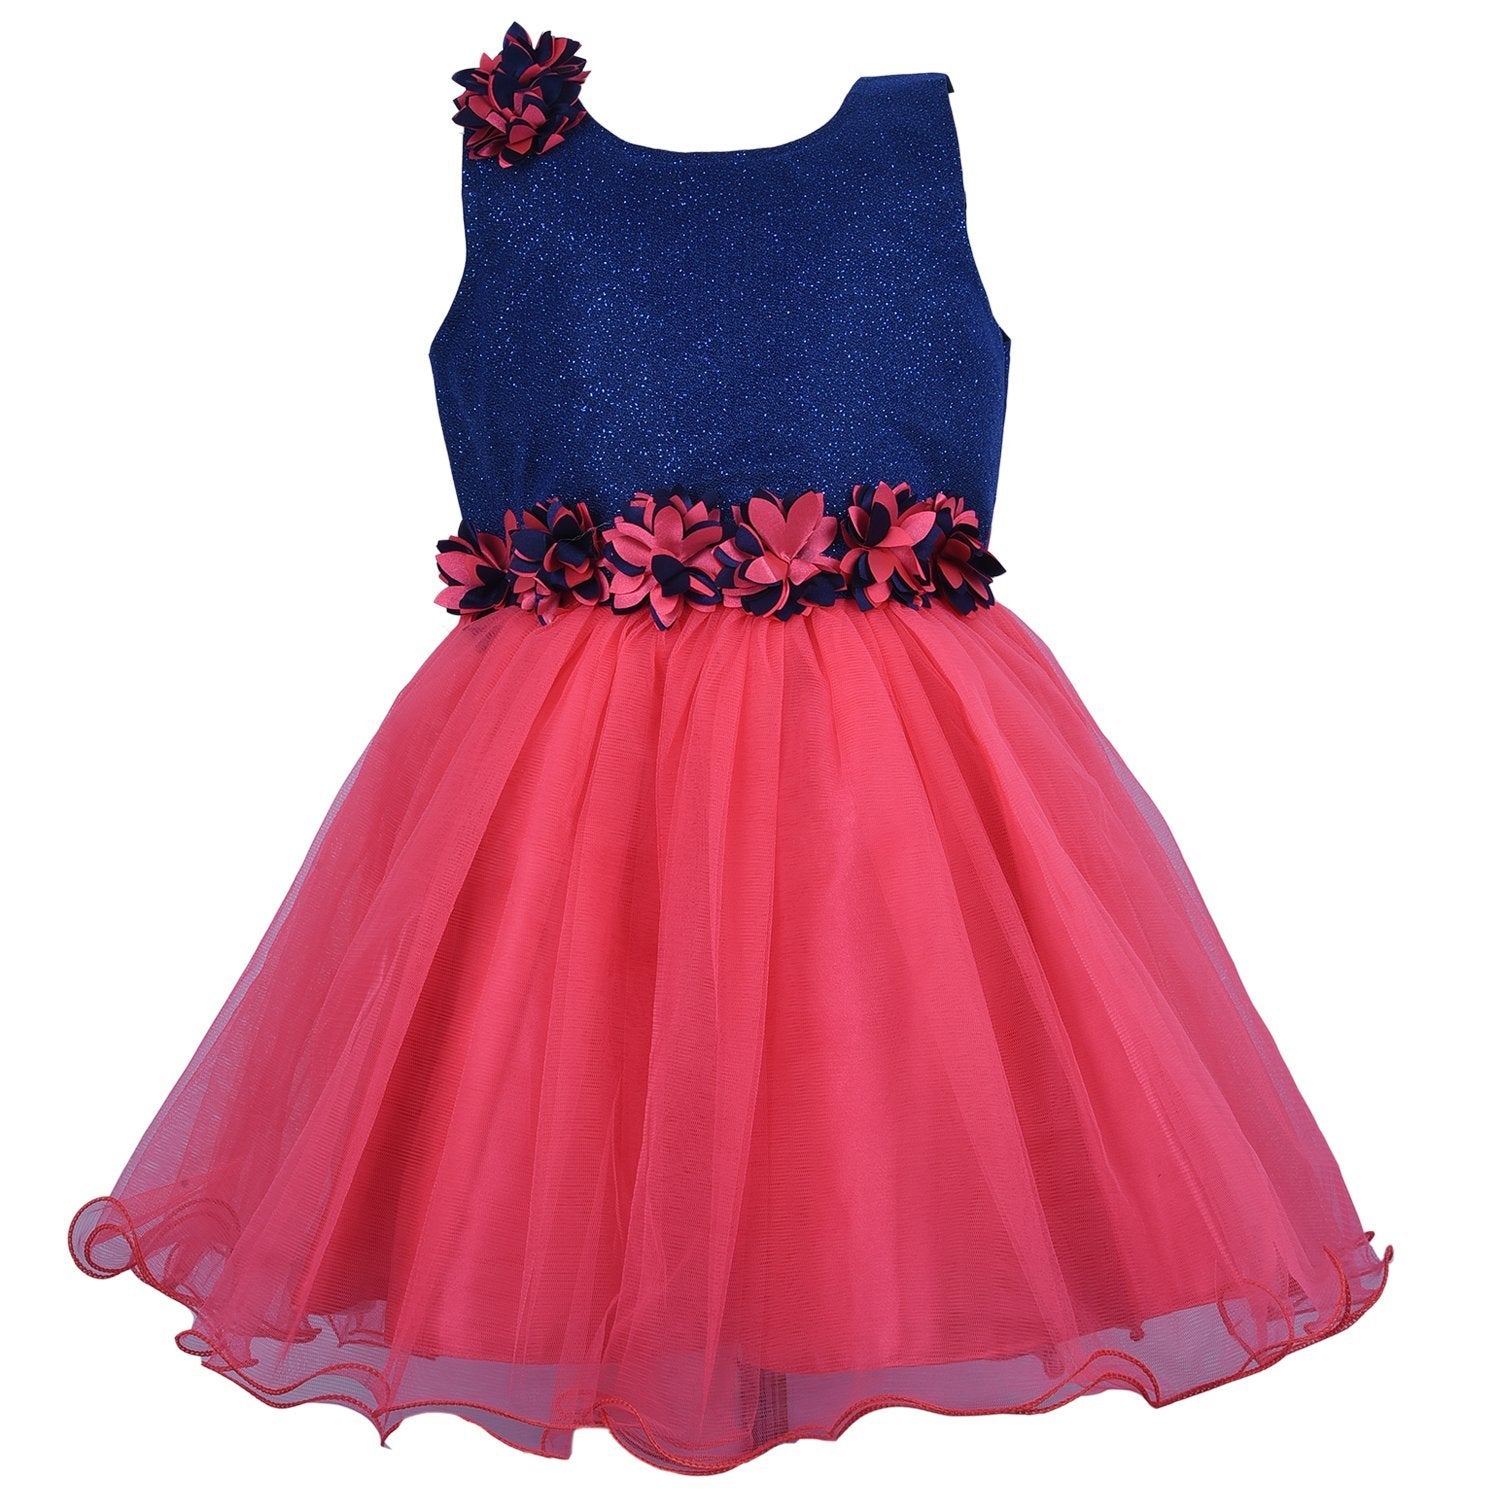 Baby Girls Party Wear Frock Dress Fr1005T -  Wish Karo Dresses